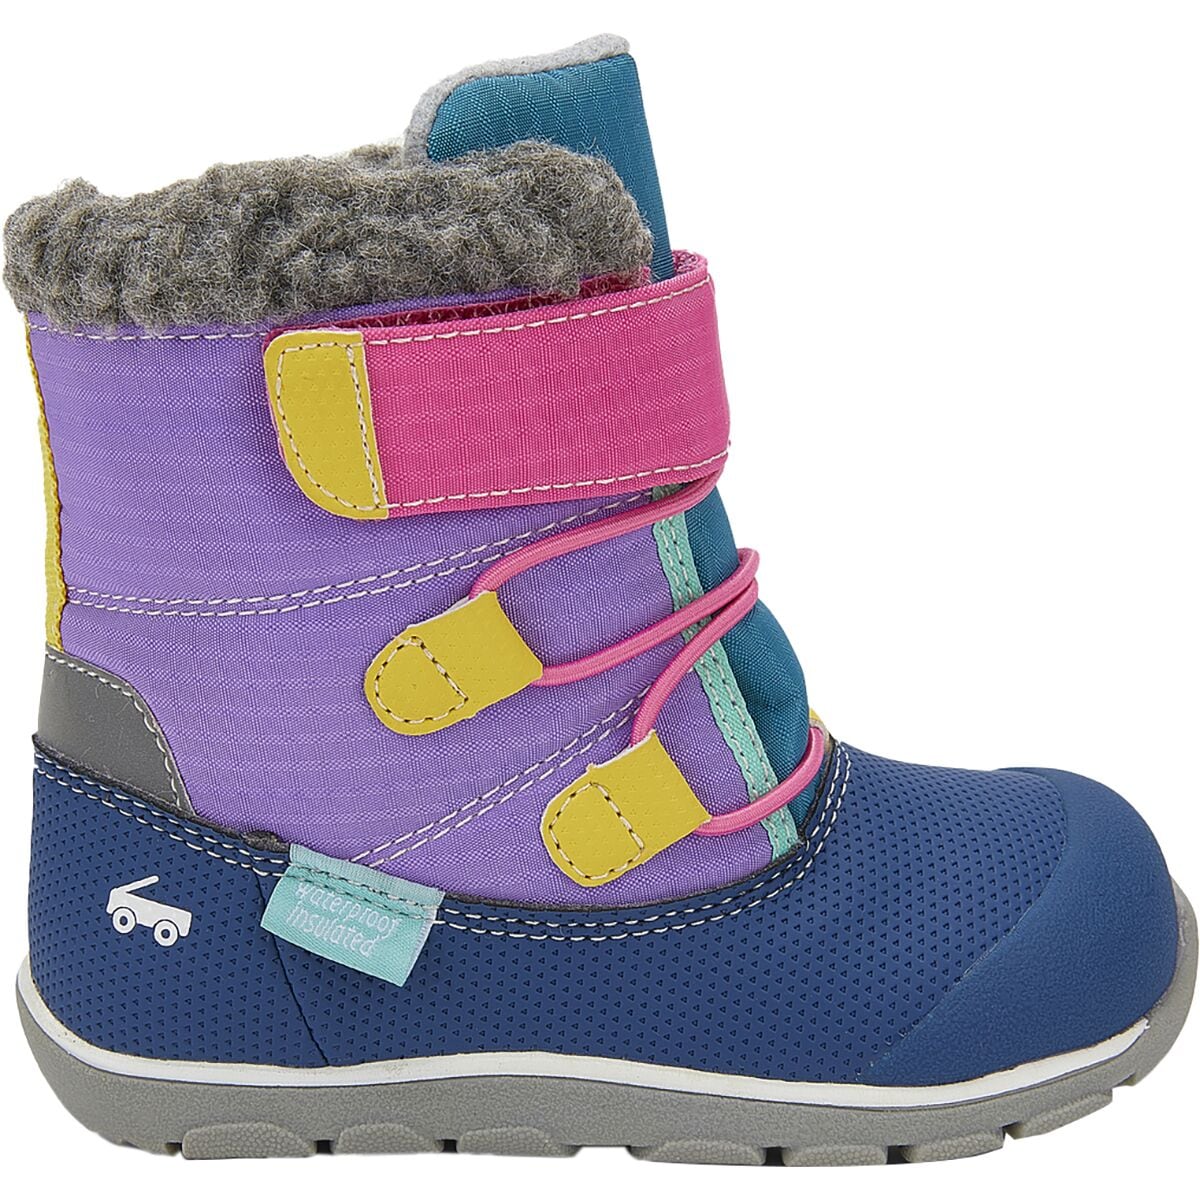 Gilman Waterproof Insulated Boot - Girls